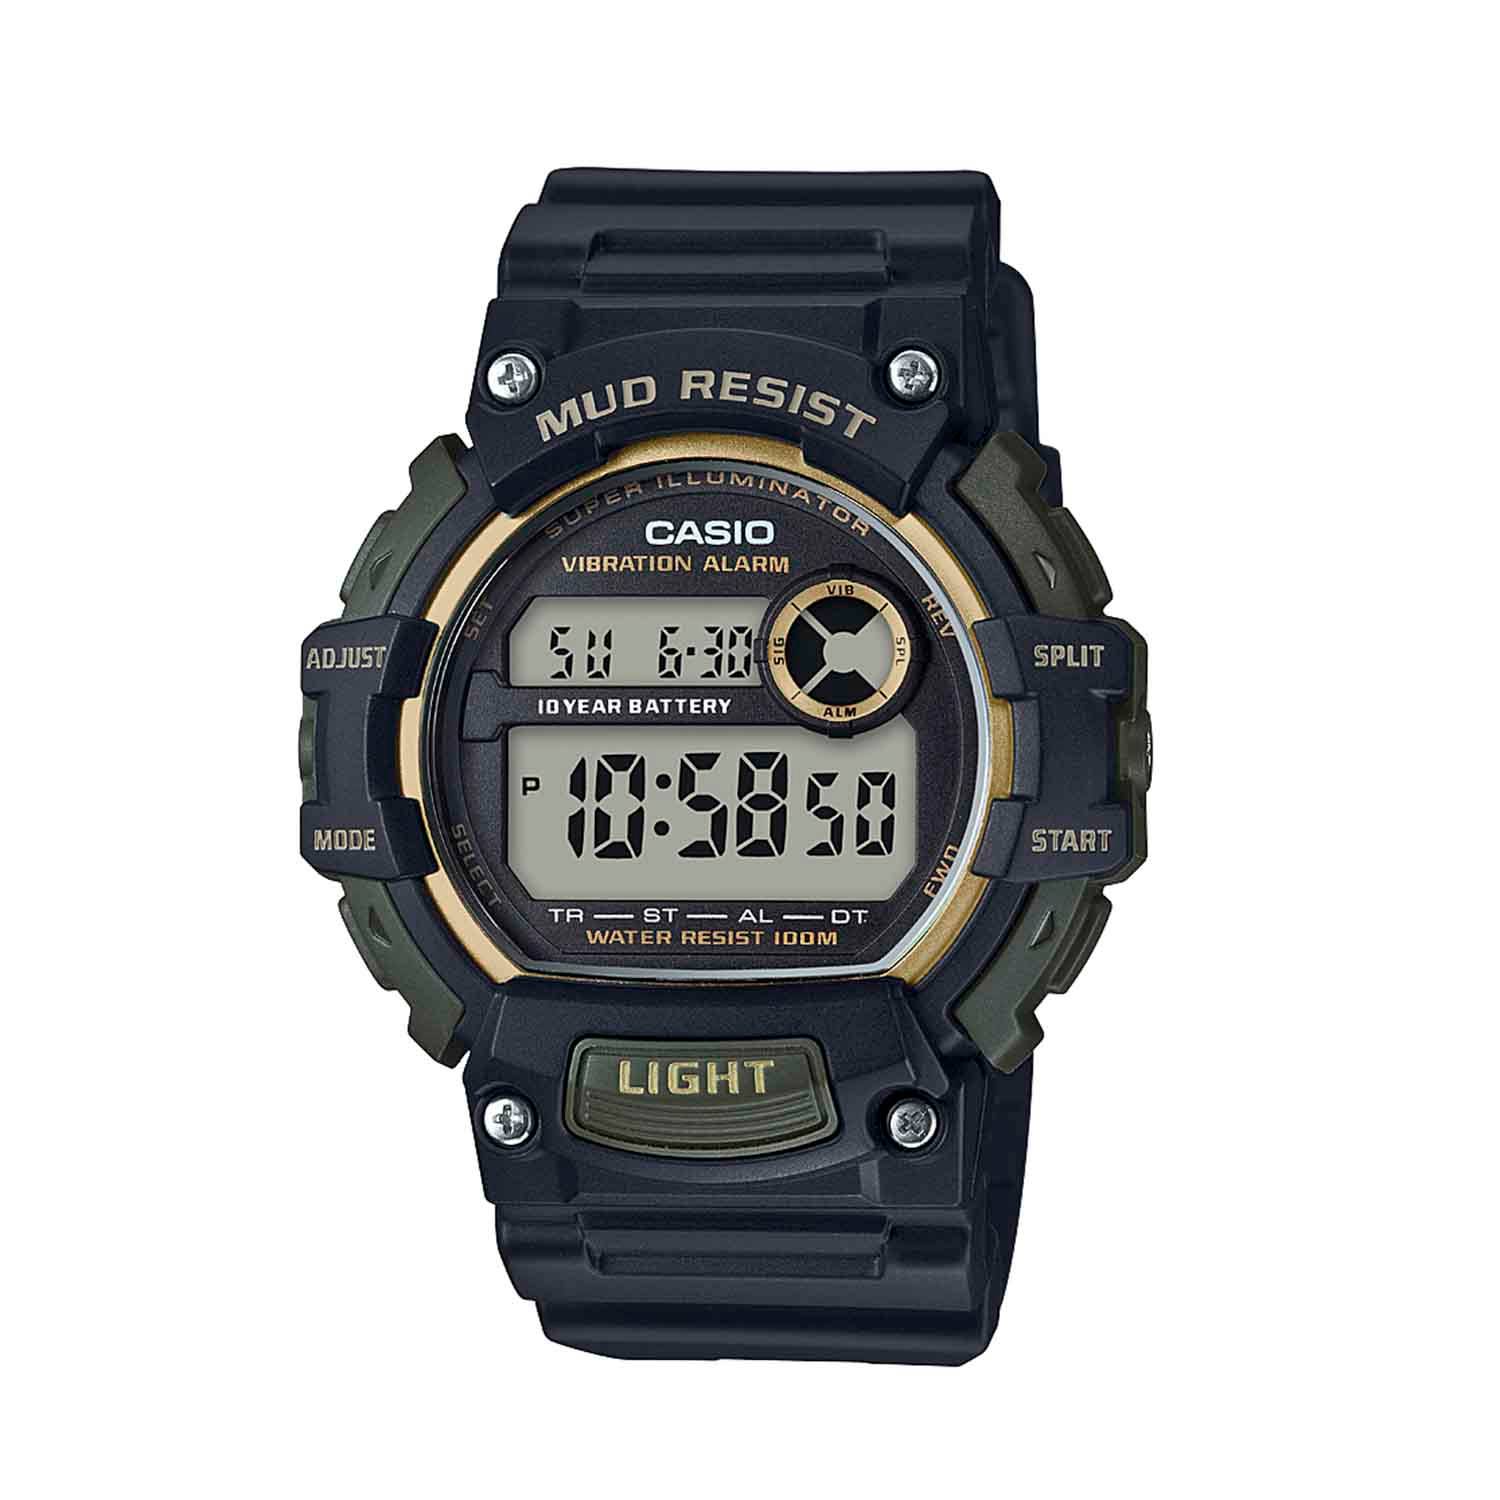 Casio Mud Resist Digital Watch - TRT-110H-1A2VCF